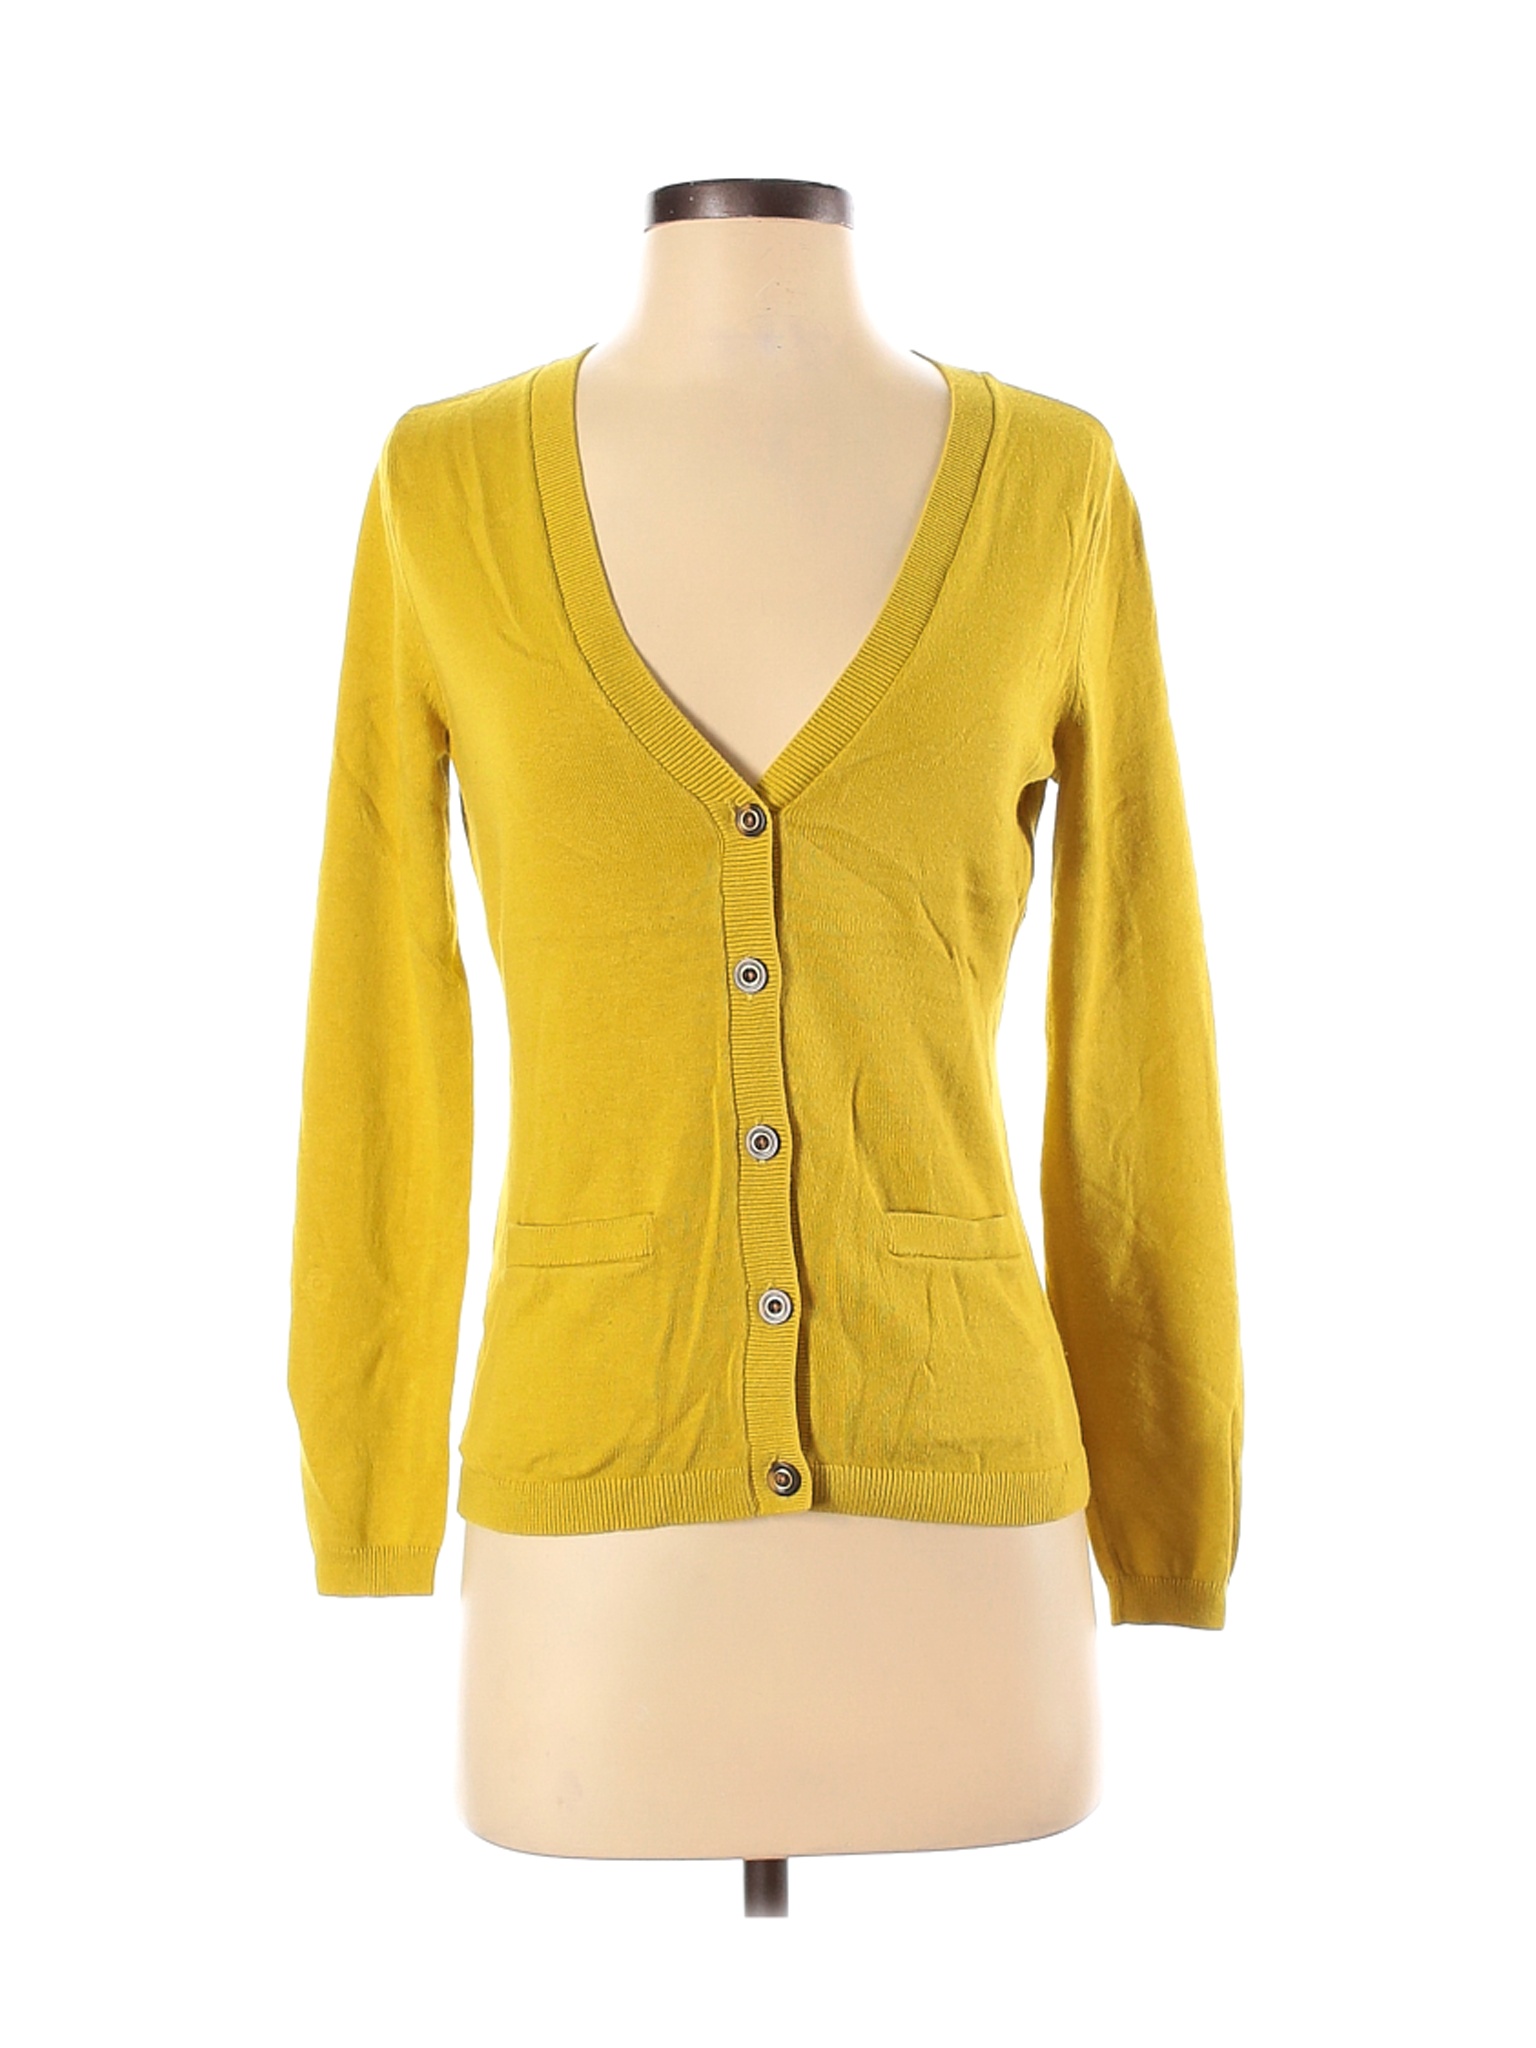 Banana Republic Factory Store Women Yellow Cardigan S | eBay